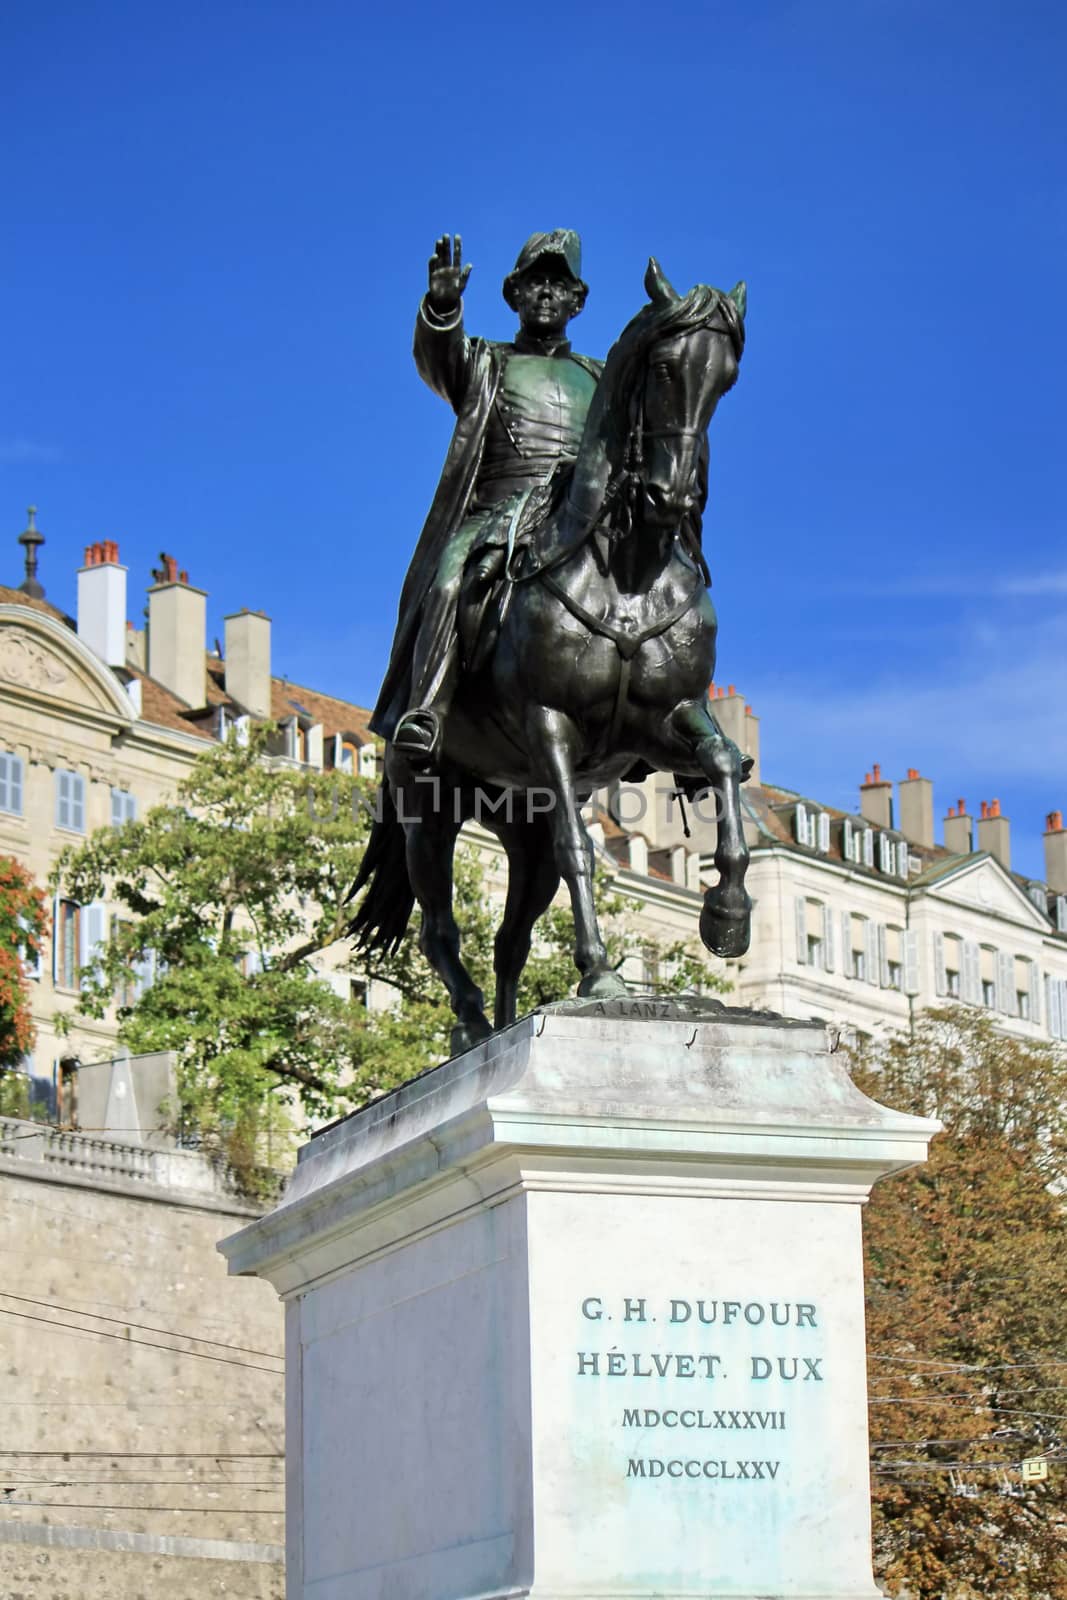 General Dufour statue, Geneva, Switzerland by Elenaphotos21